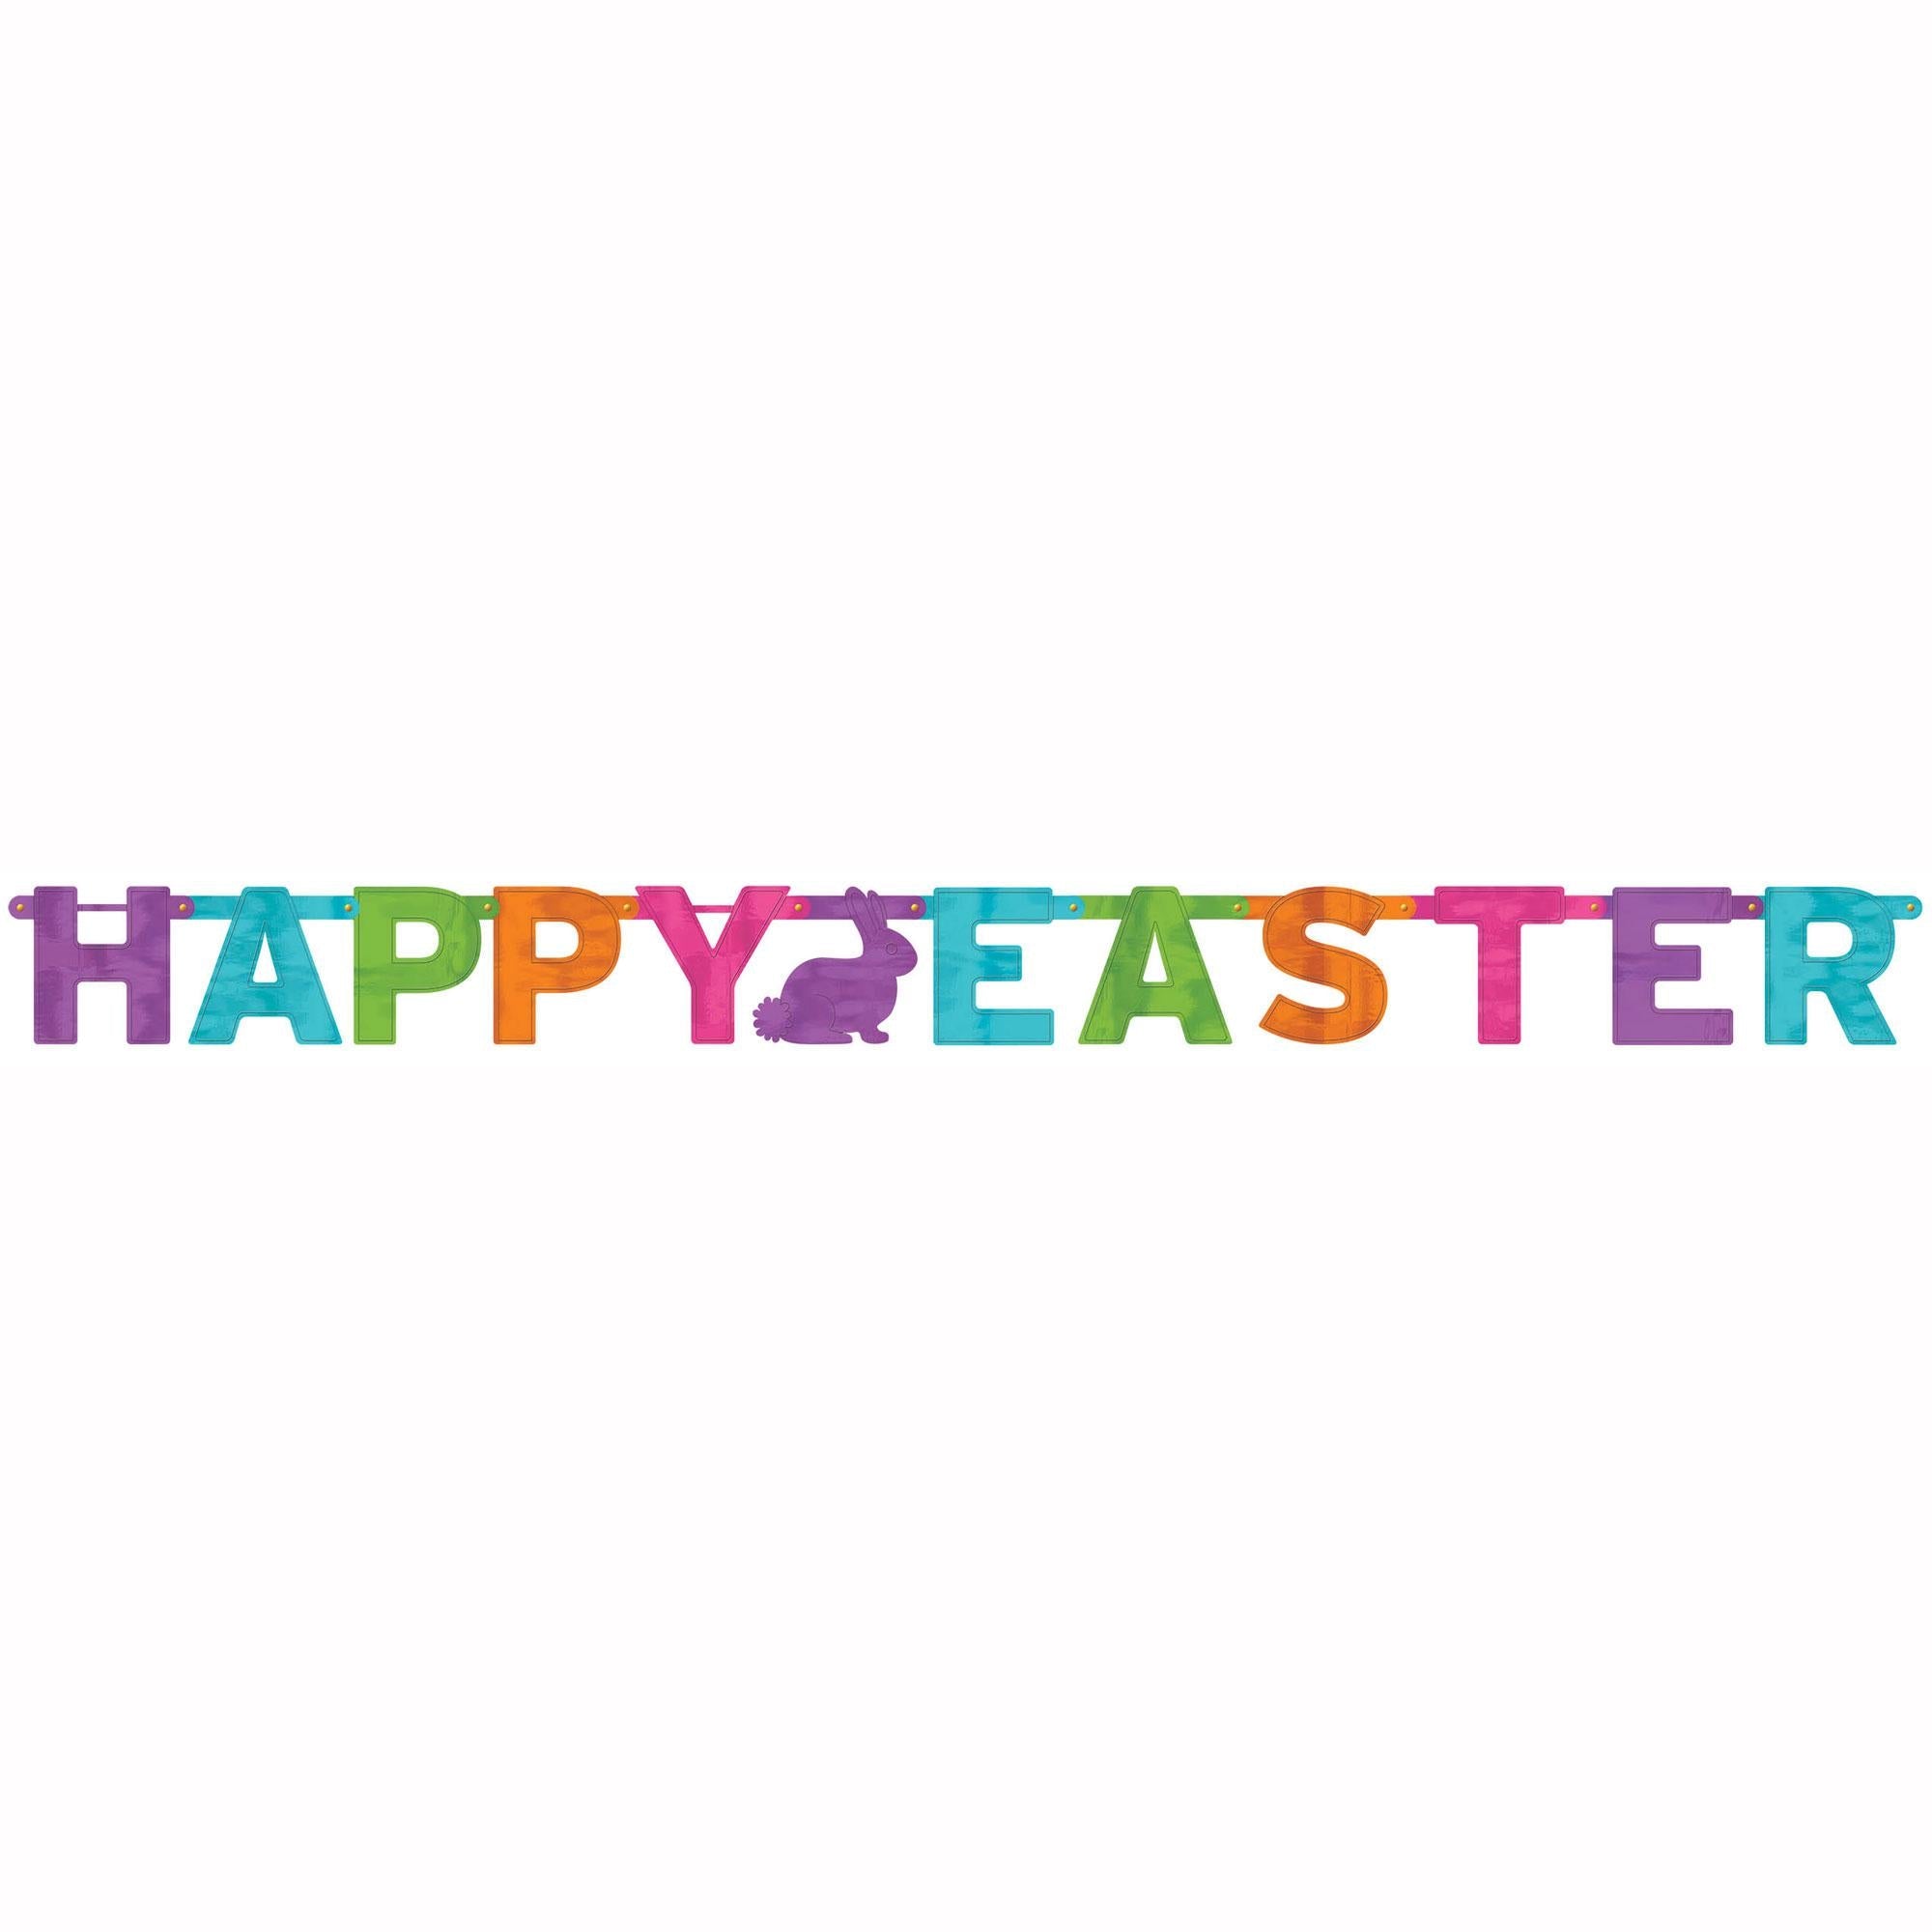 Happy Easter Large Foil Letter Banner Decorations - Party Centre